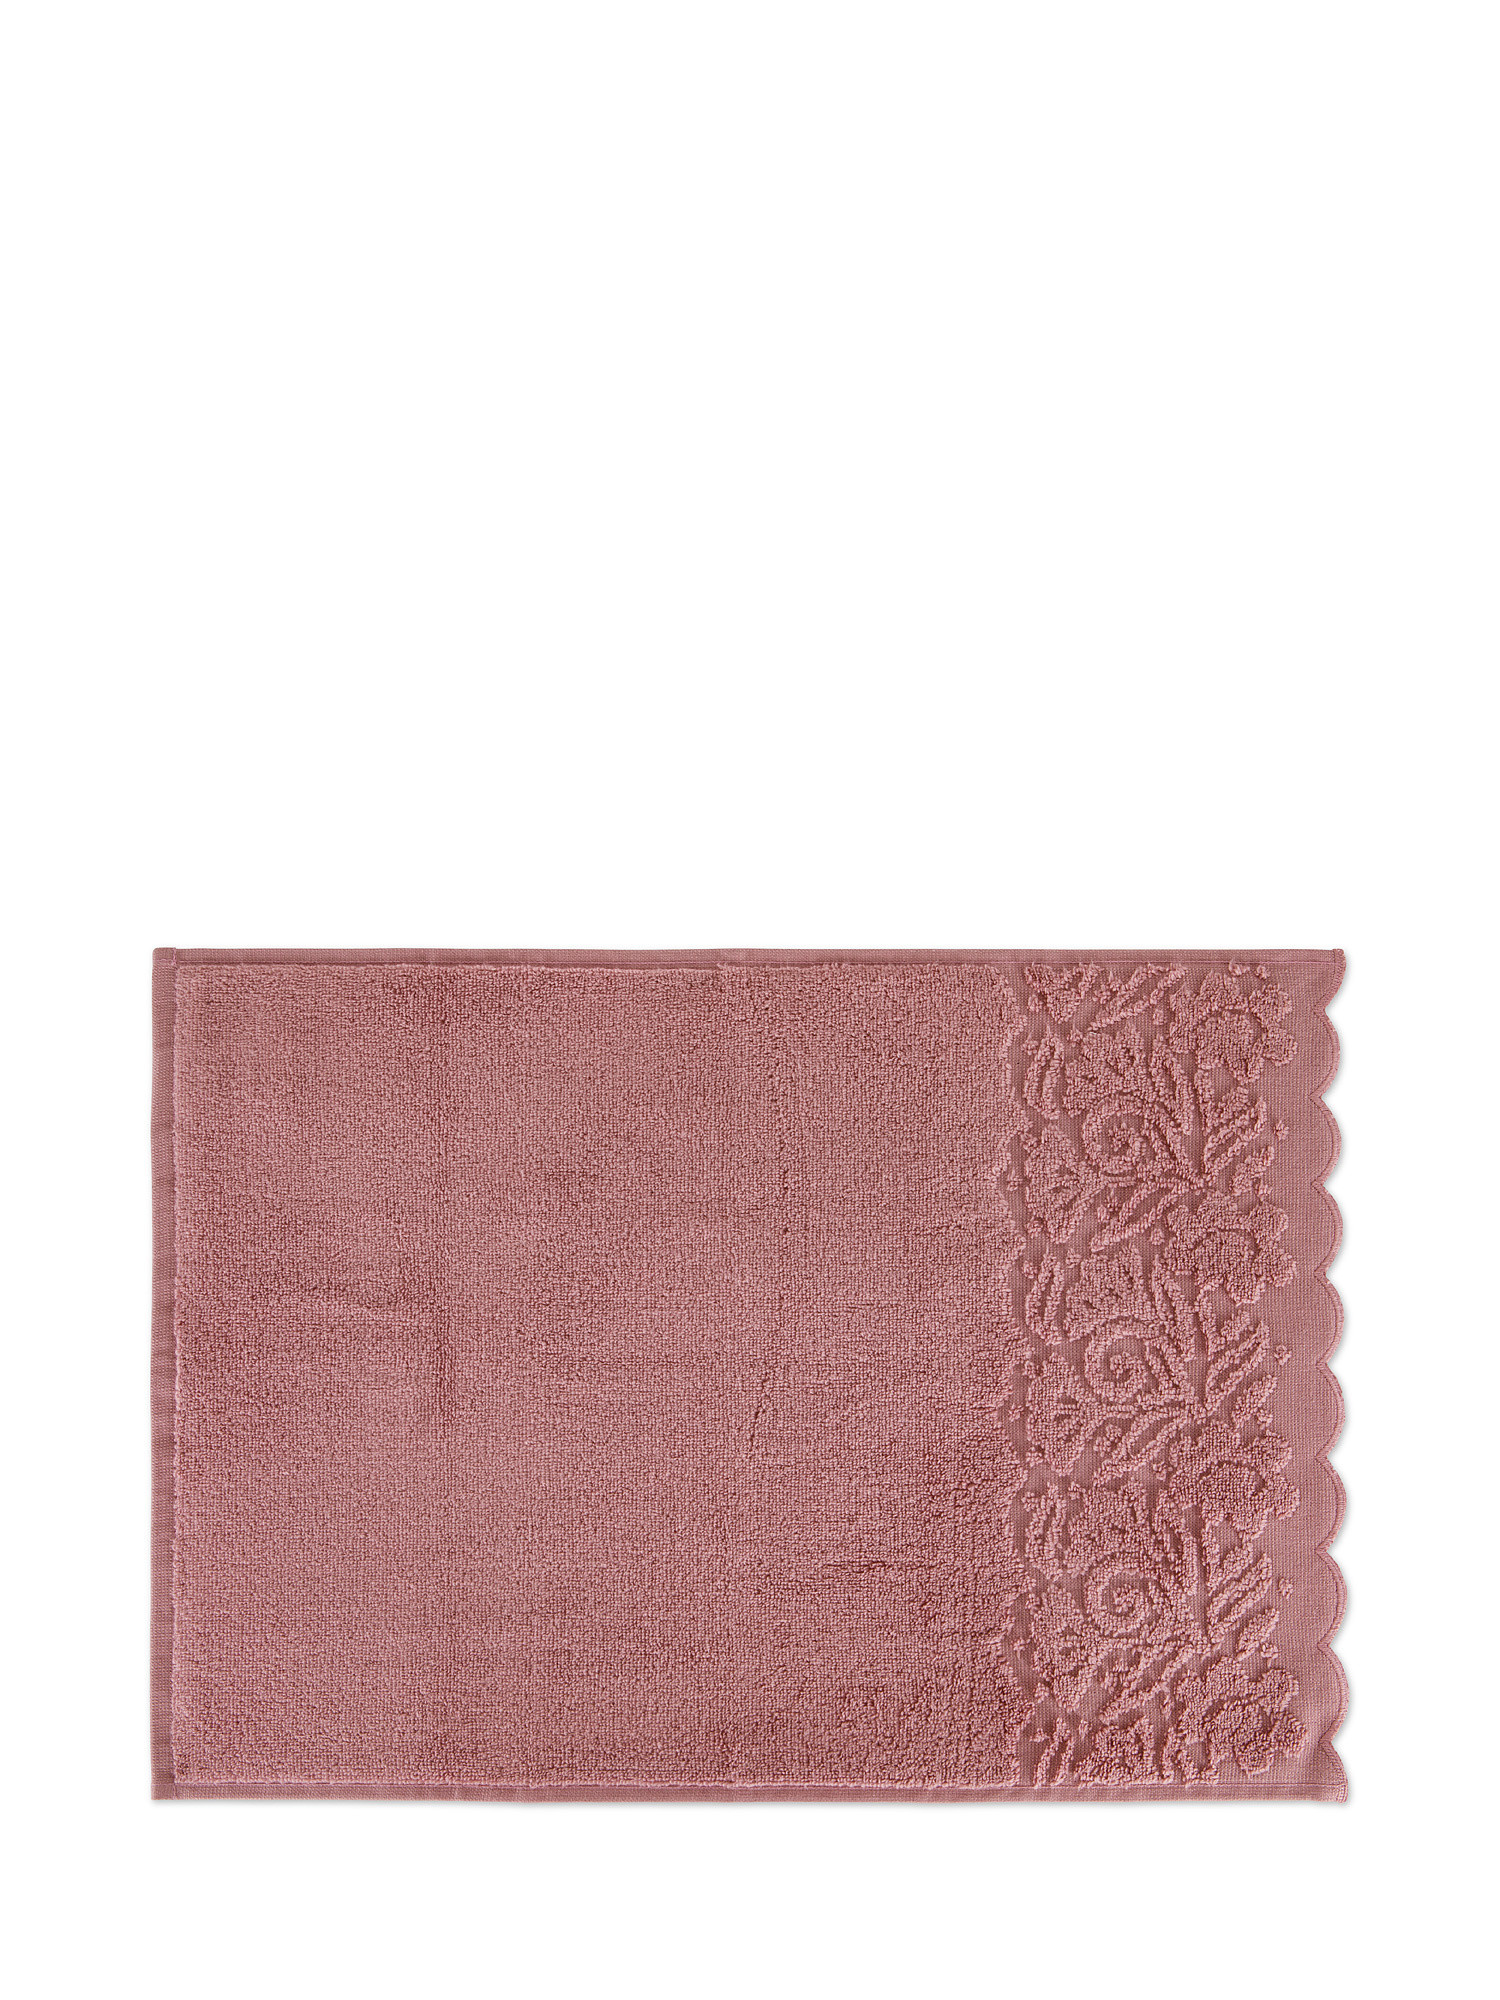 Asciugamano puro cotone bordo jacquard, Rosa, large image number 1